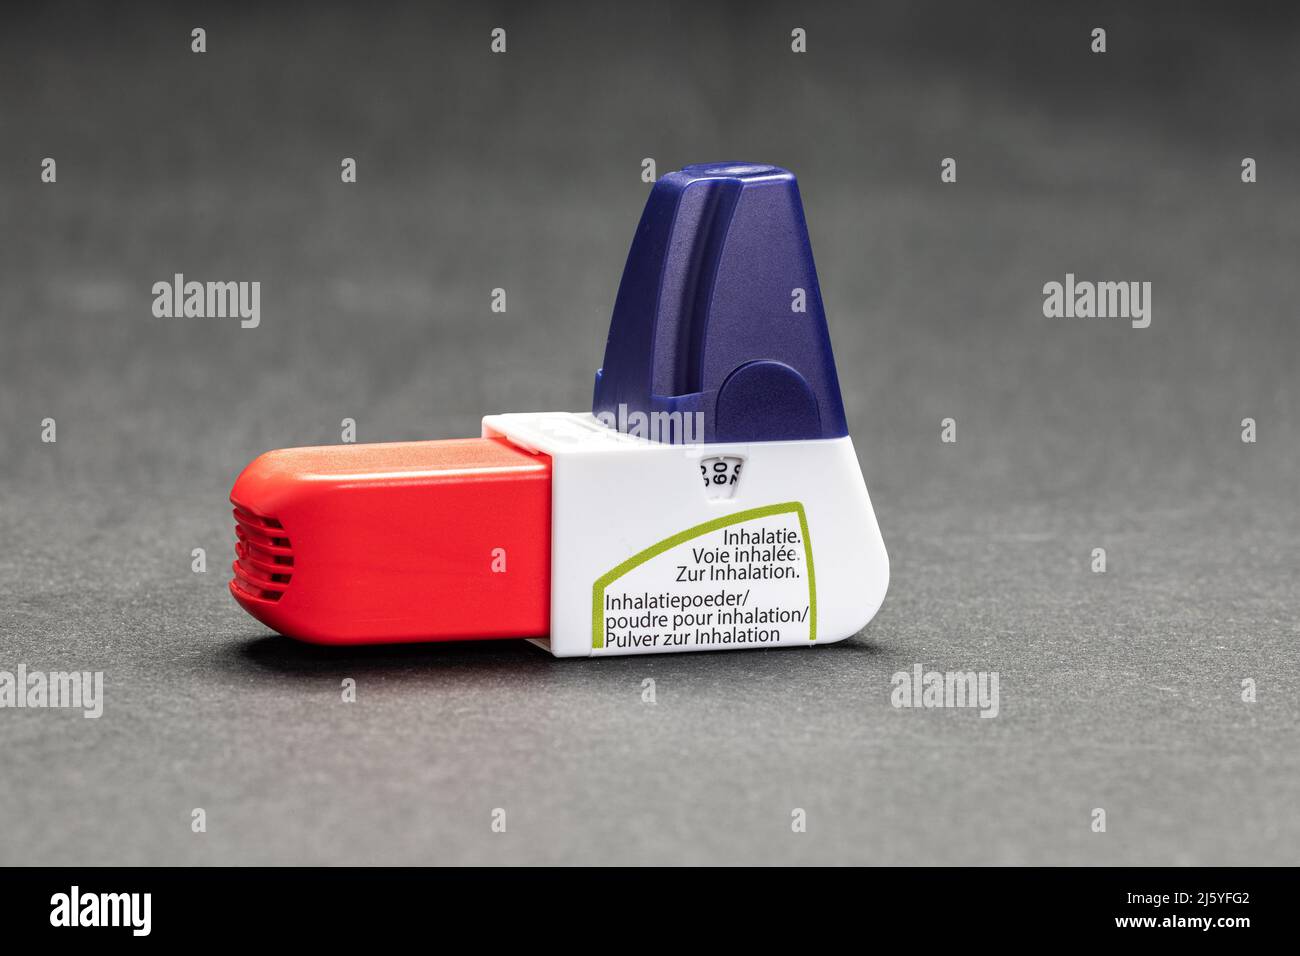 Asthma spray inhaler Stock Photo - Alamy